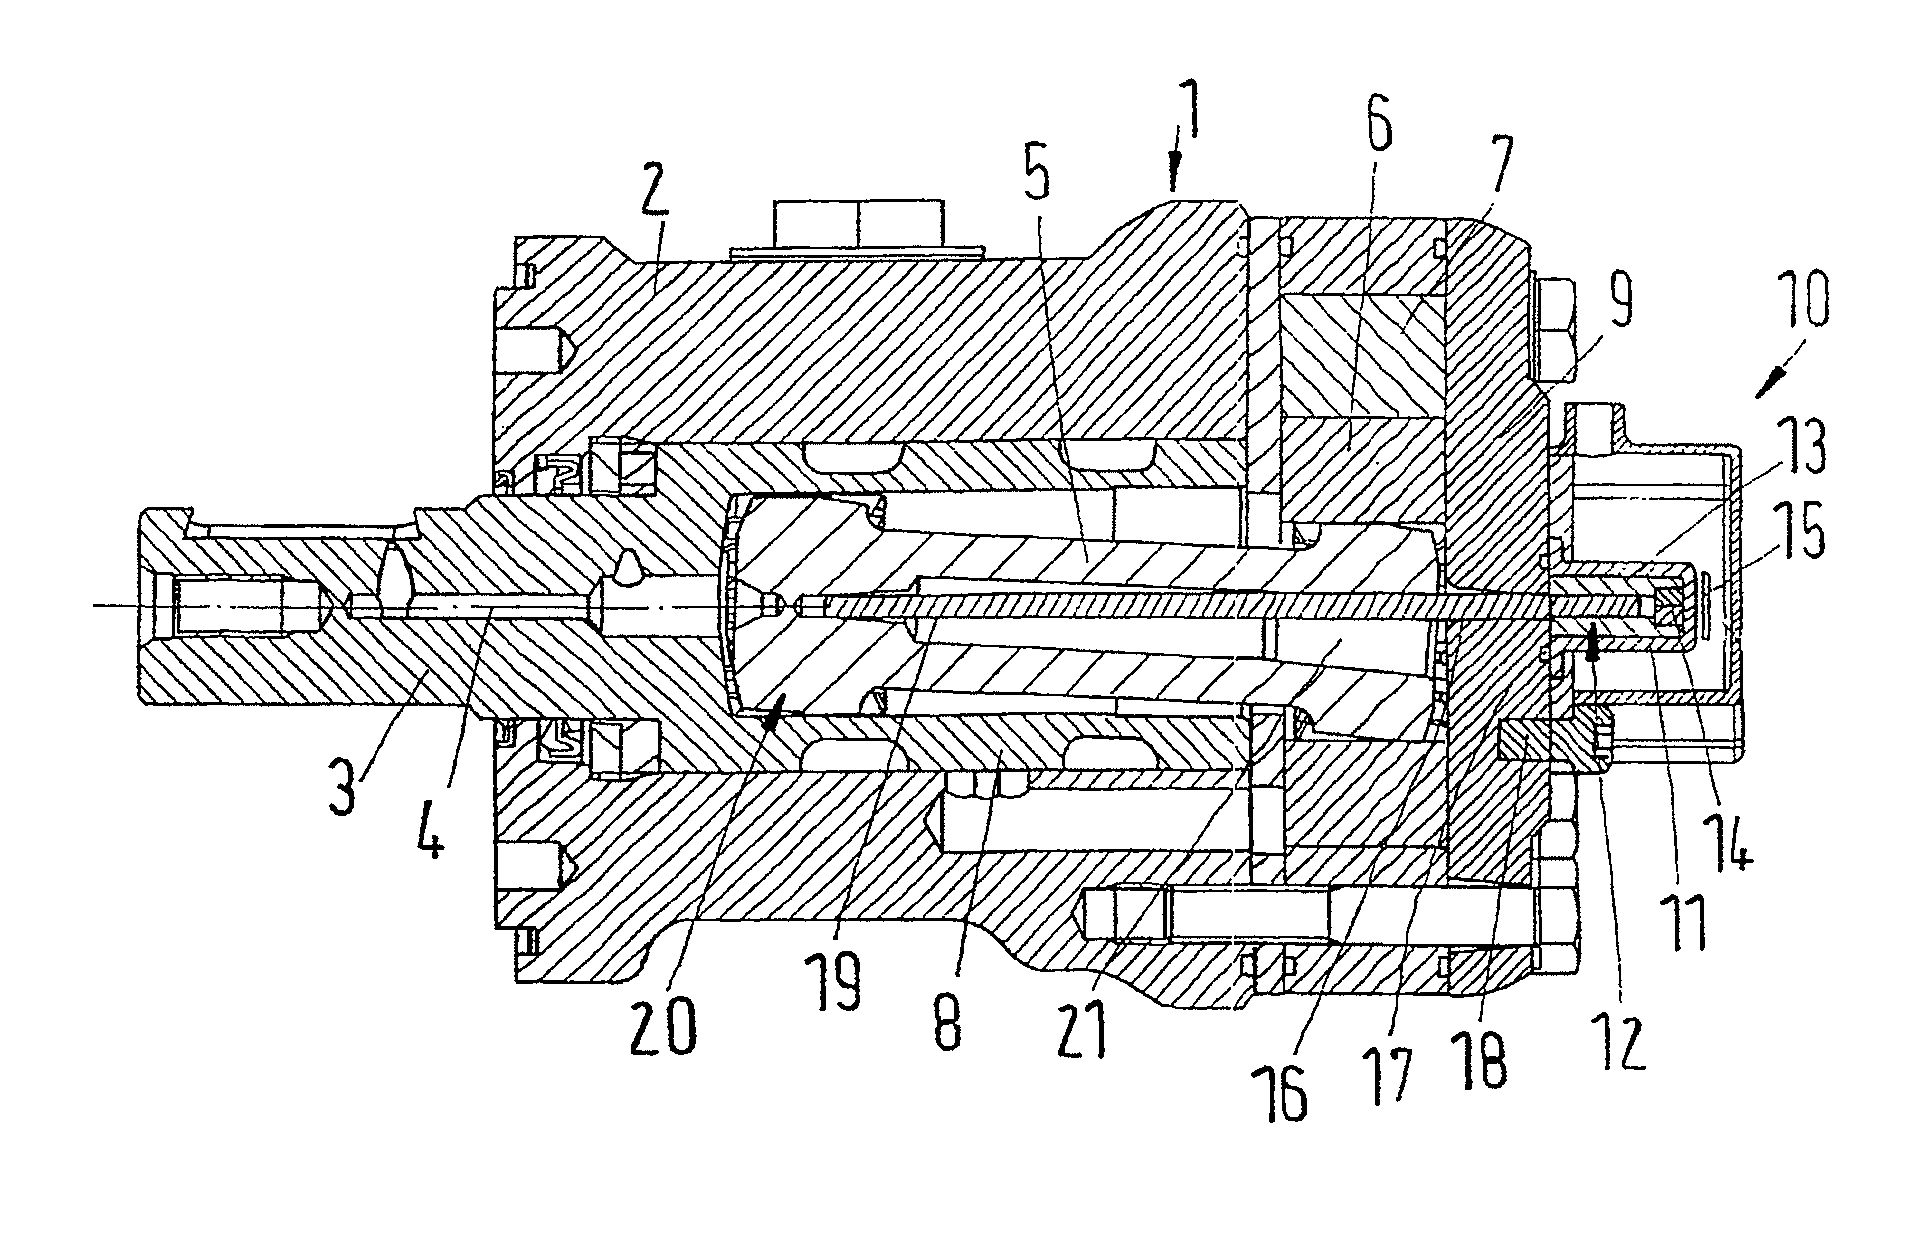 Fluid rotary machine with a sensor arrangement